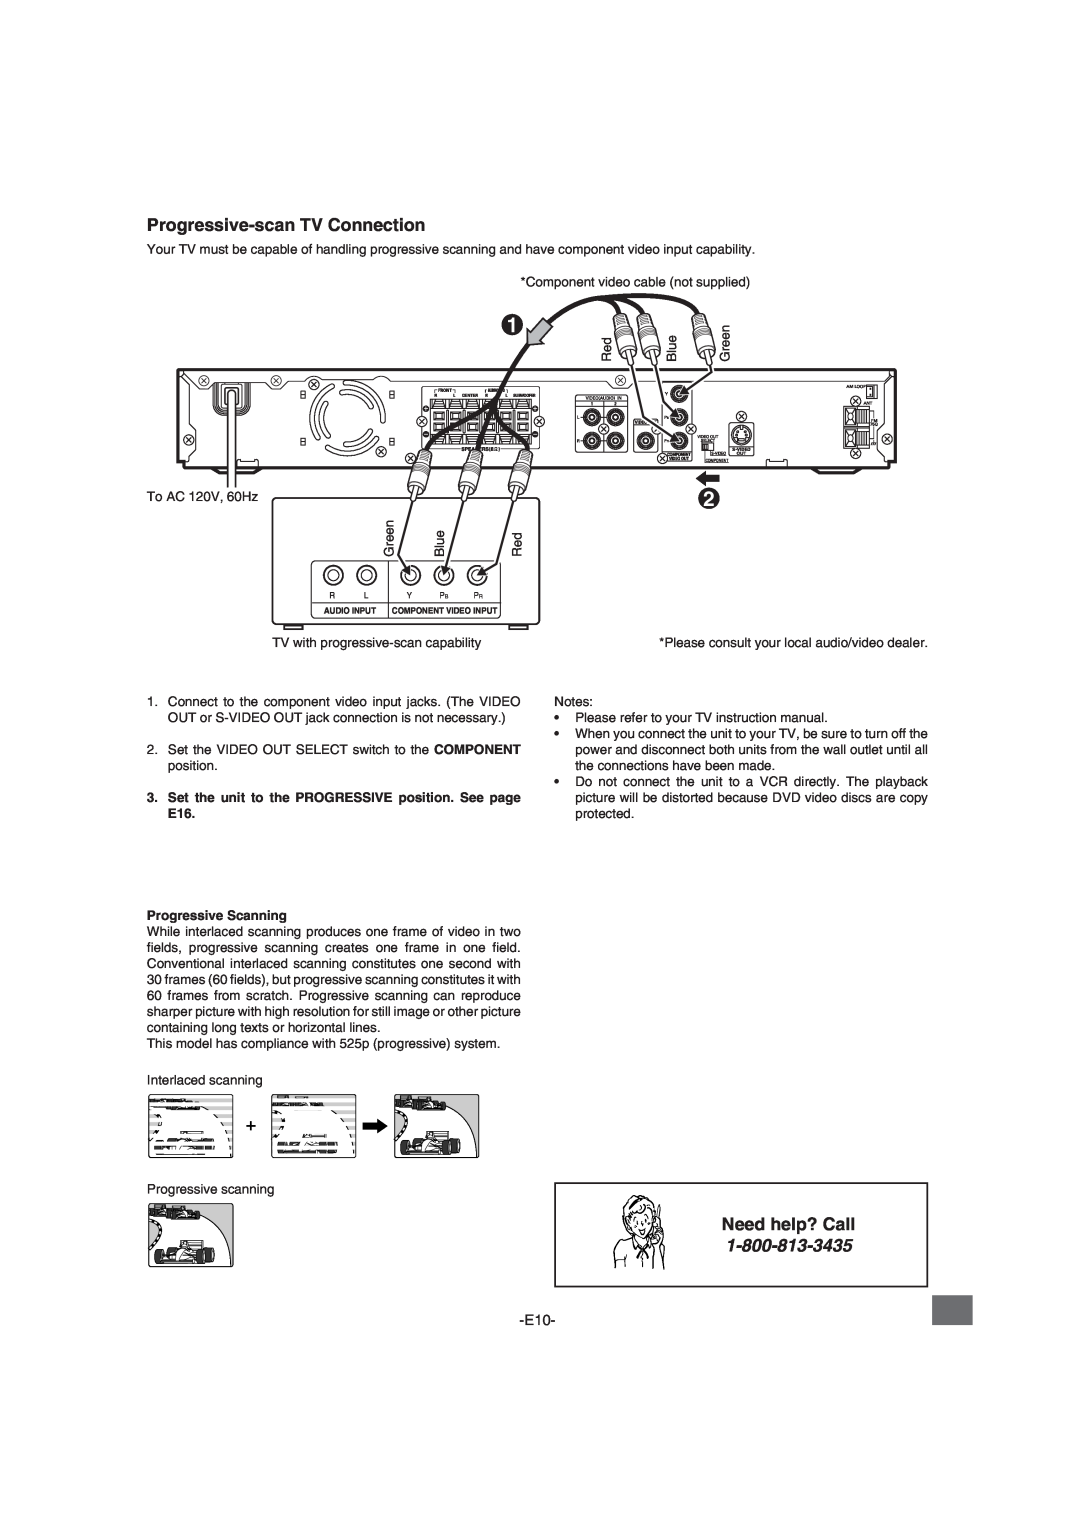 Sanyo DWM-2600 instruction manual Progressive-scanTV Connection, Need help? Call, Progressive Scanning 